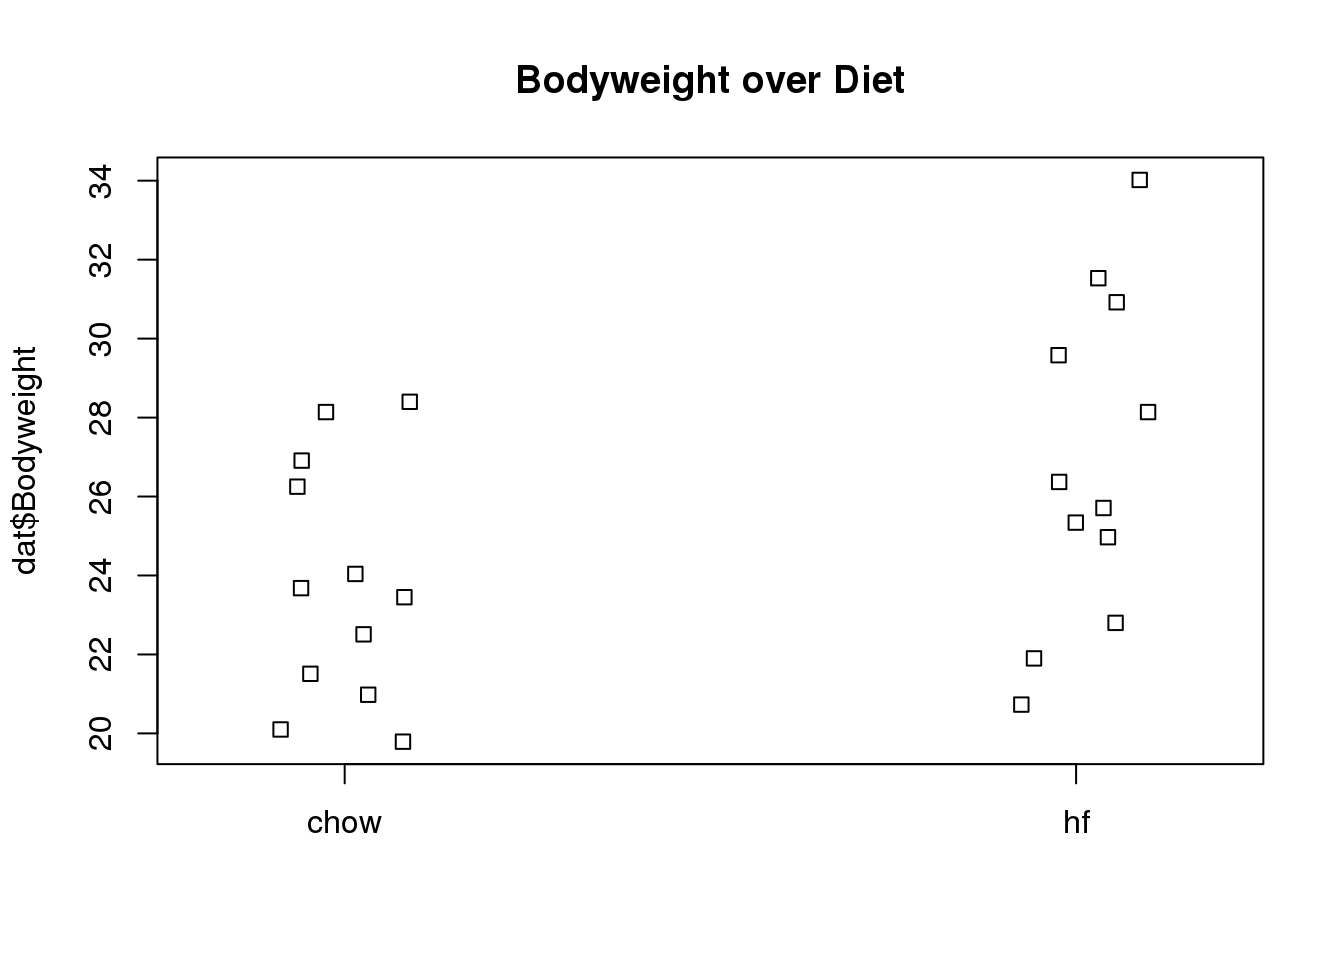 Mice bodyweights stratified by diet.